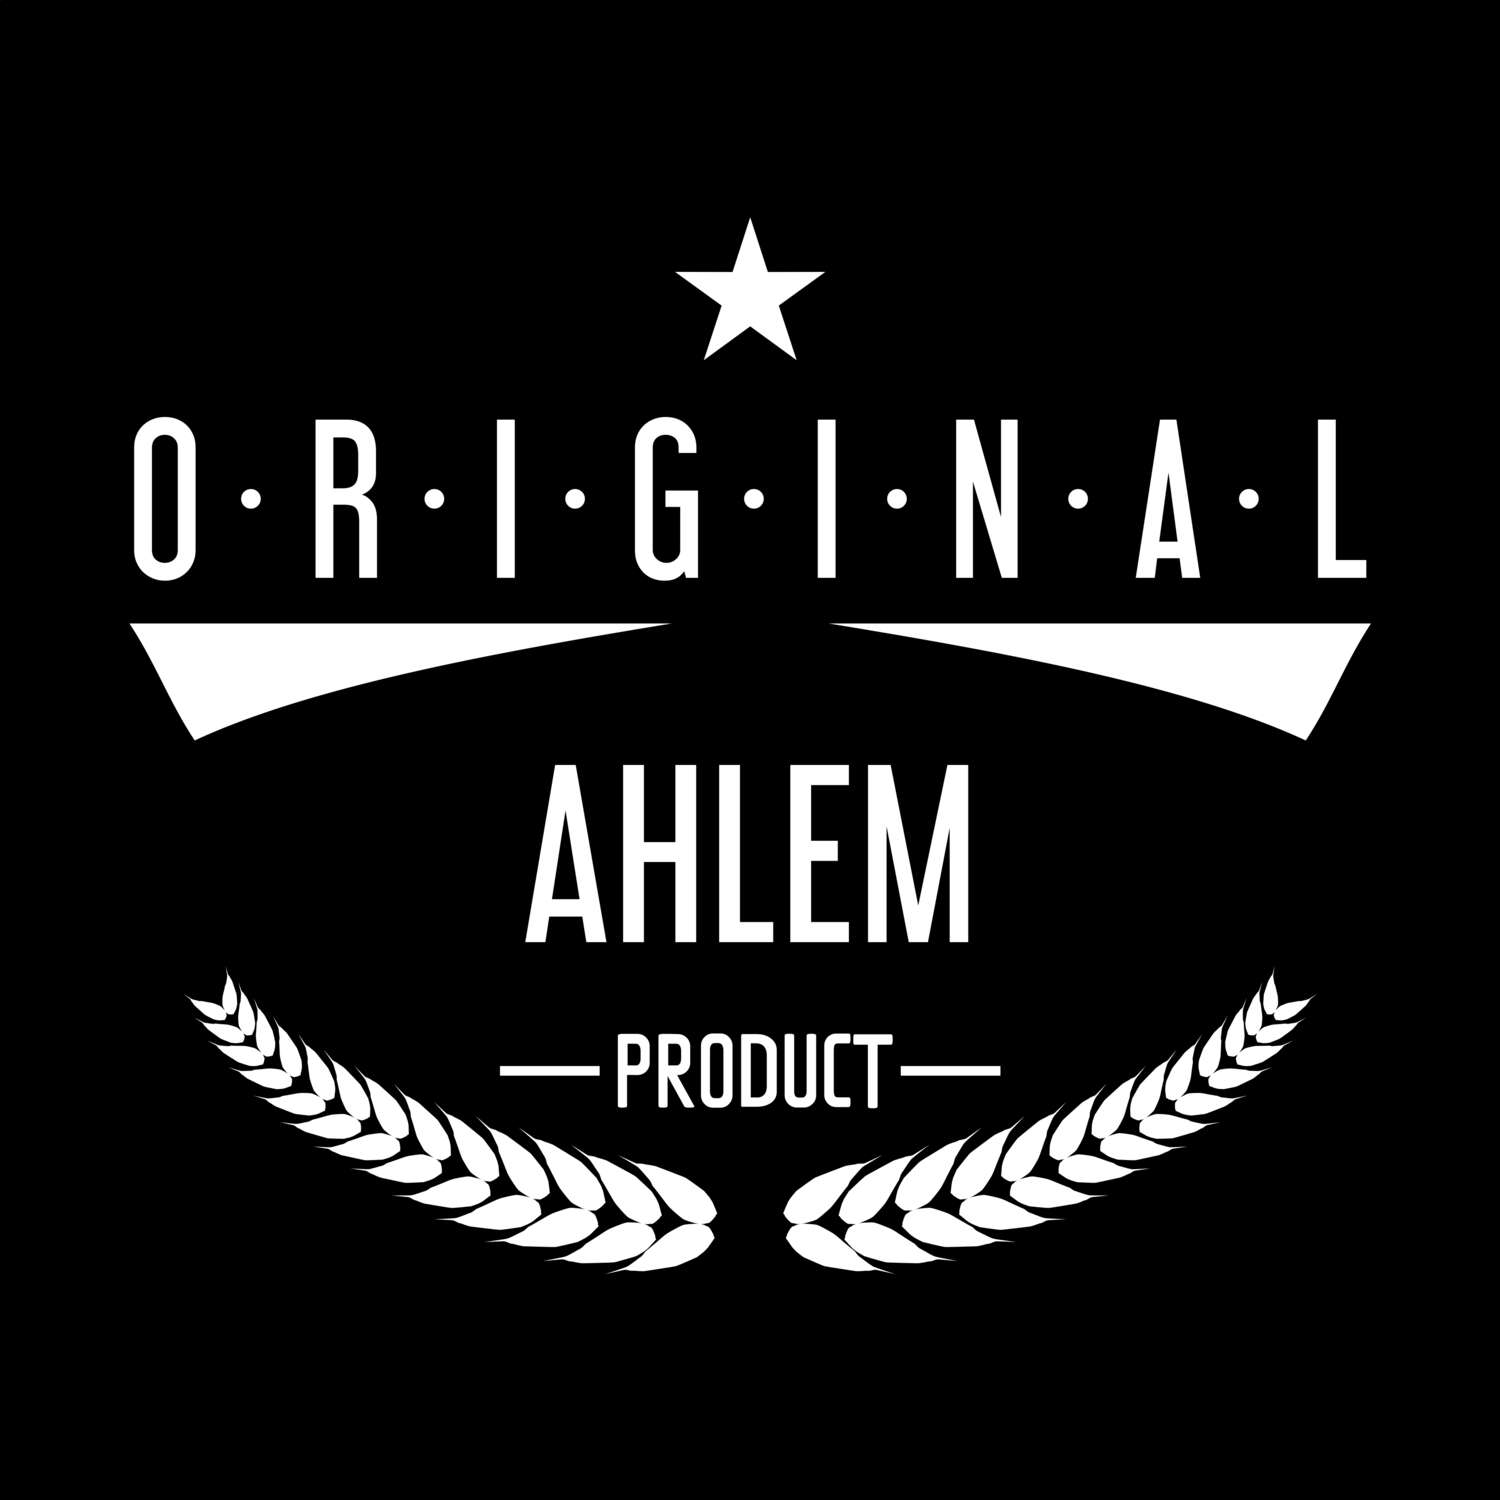 Ahlem T-Shirt »Original Product«